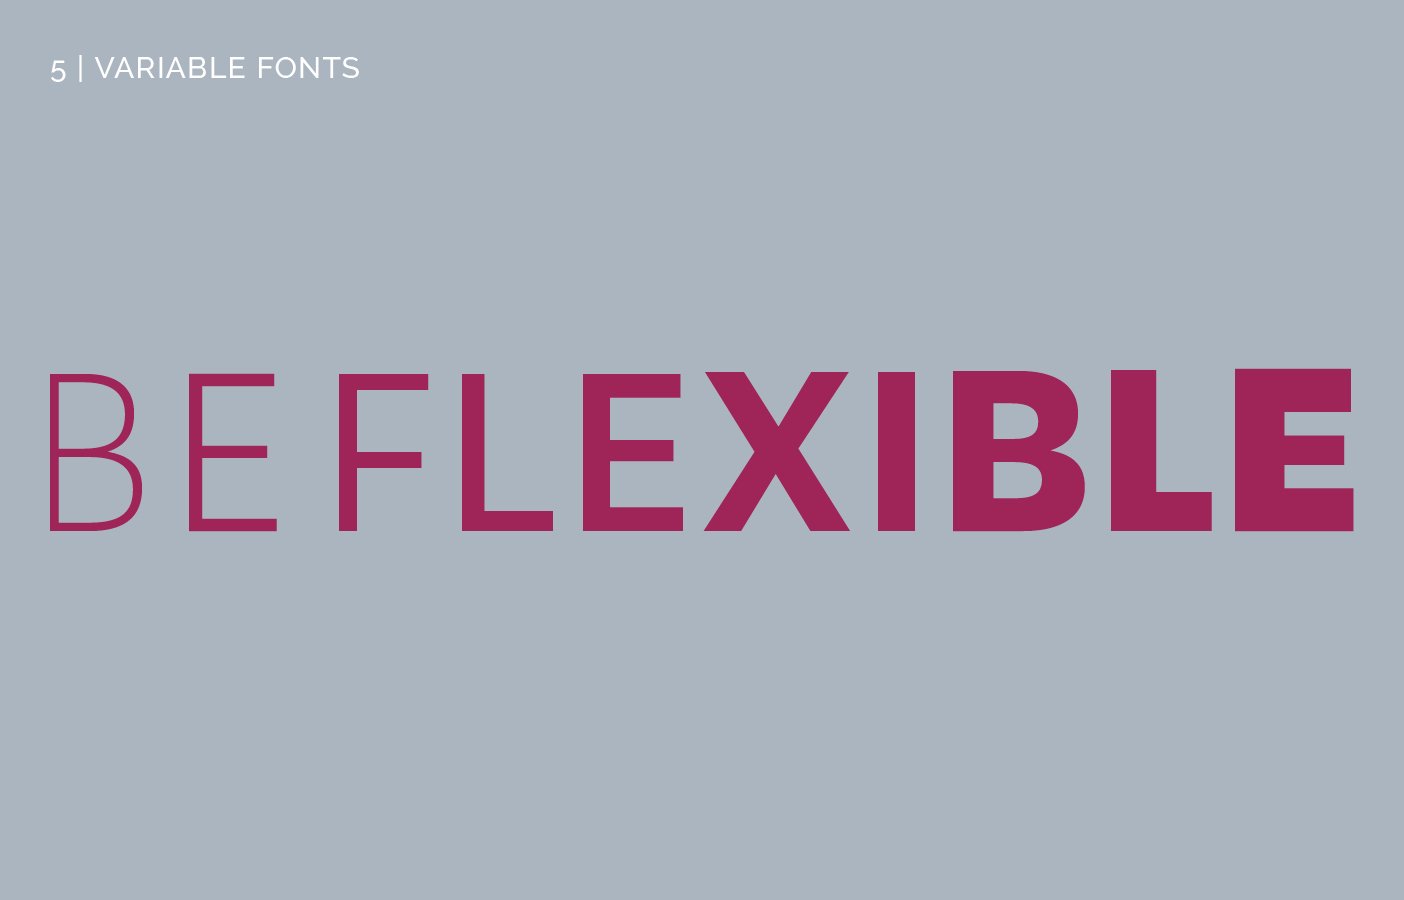 Schriftzug "Be Flexible" in weinrot auf grau